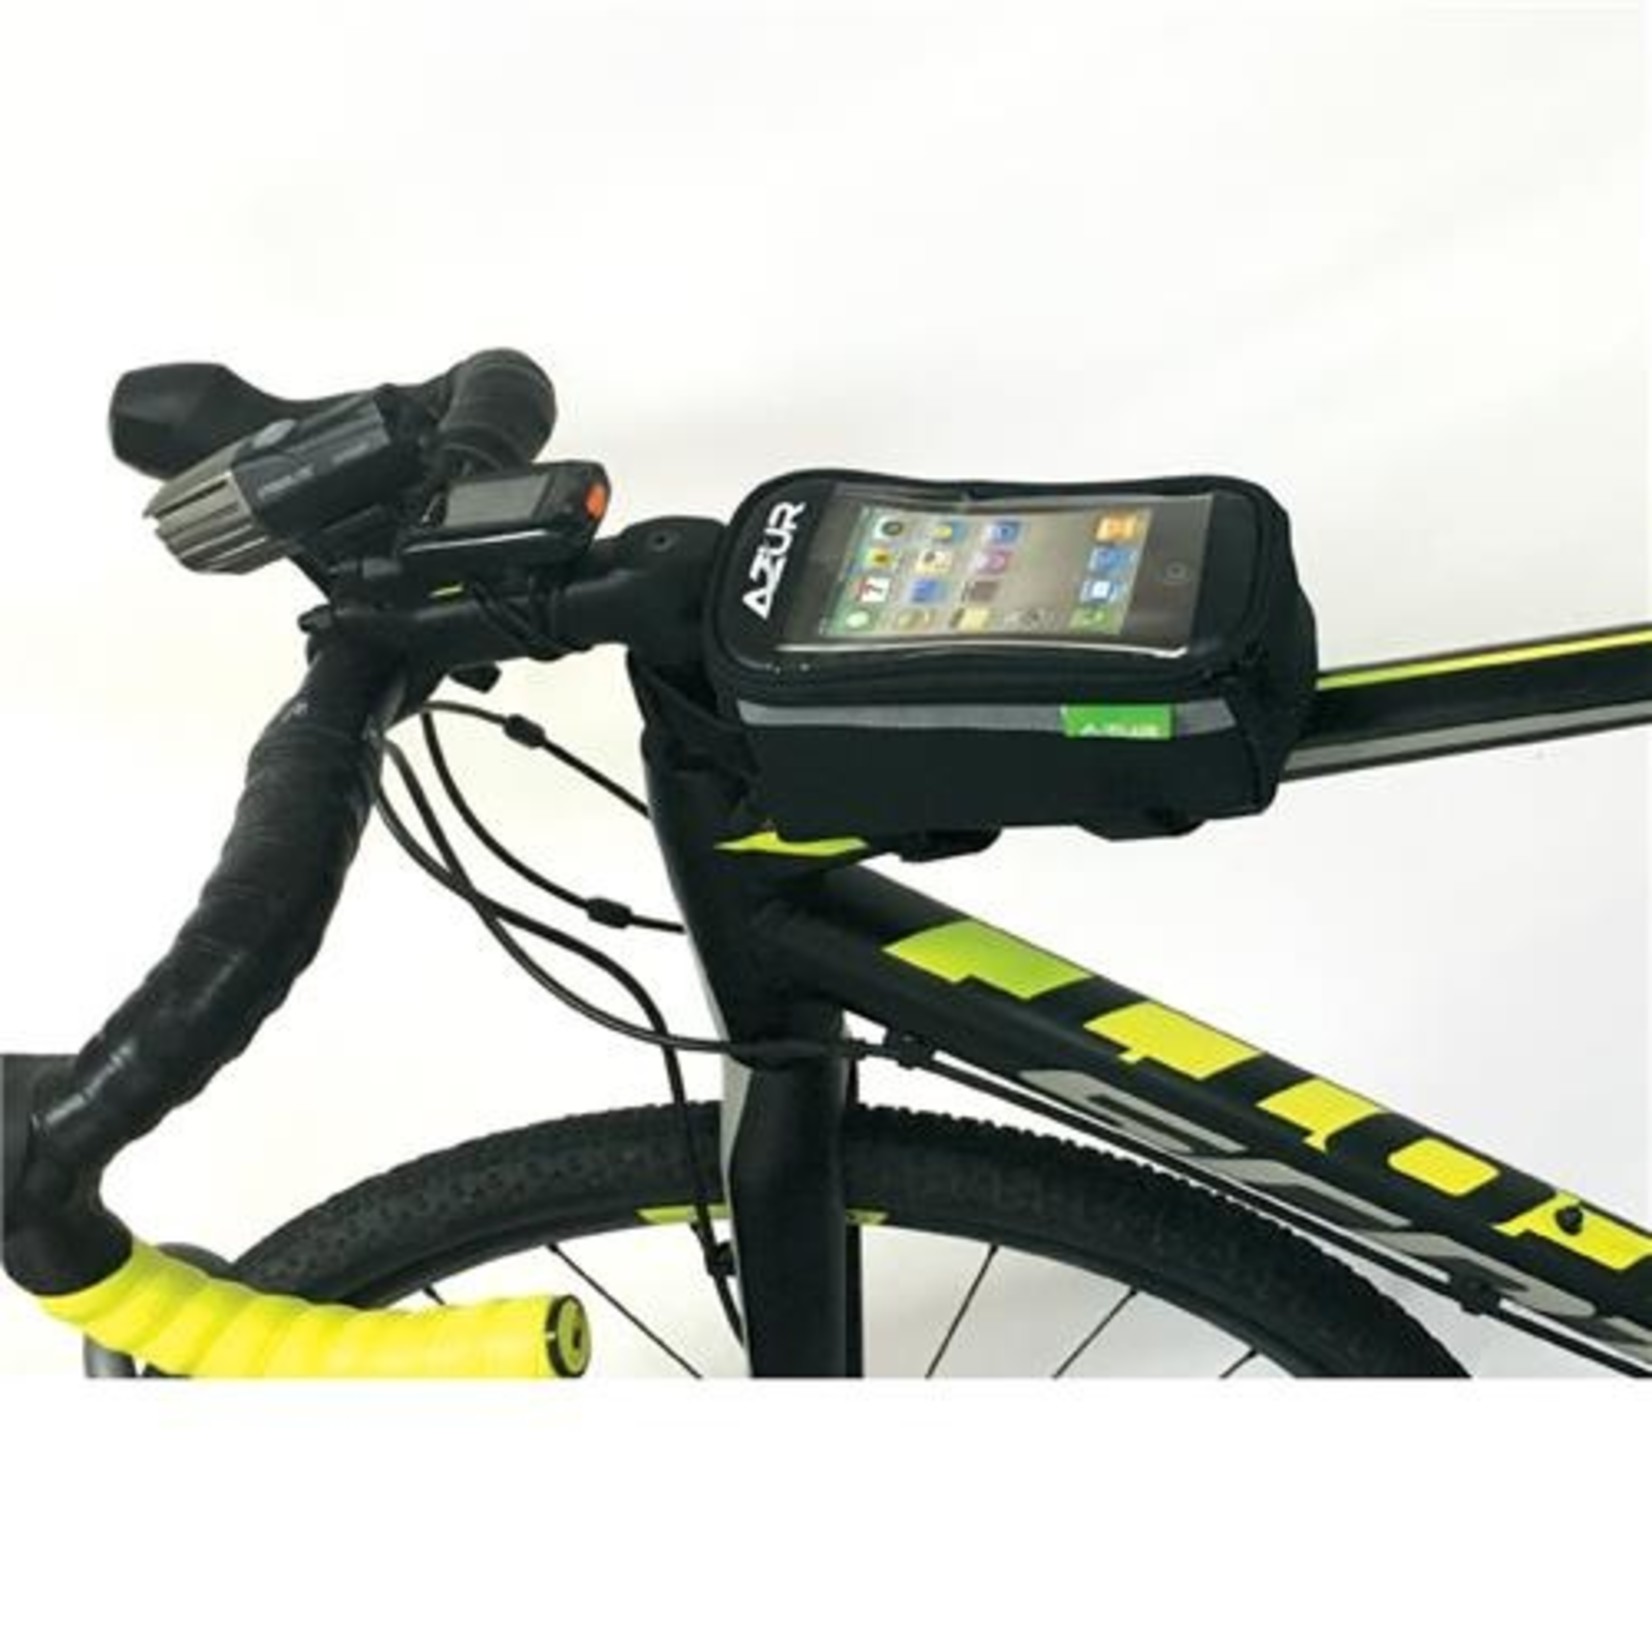 Azur Azur Bike/Cycling Top Tube Phone Bag - 10.5cm - WX90cmHX17.5cmD - Black